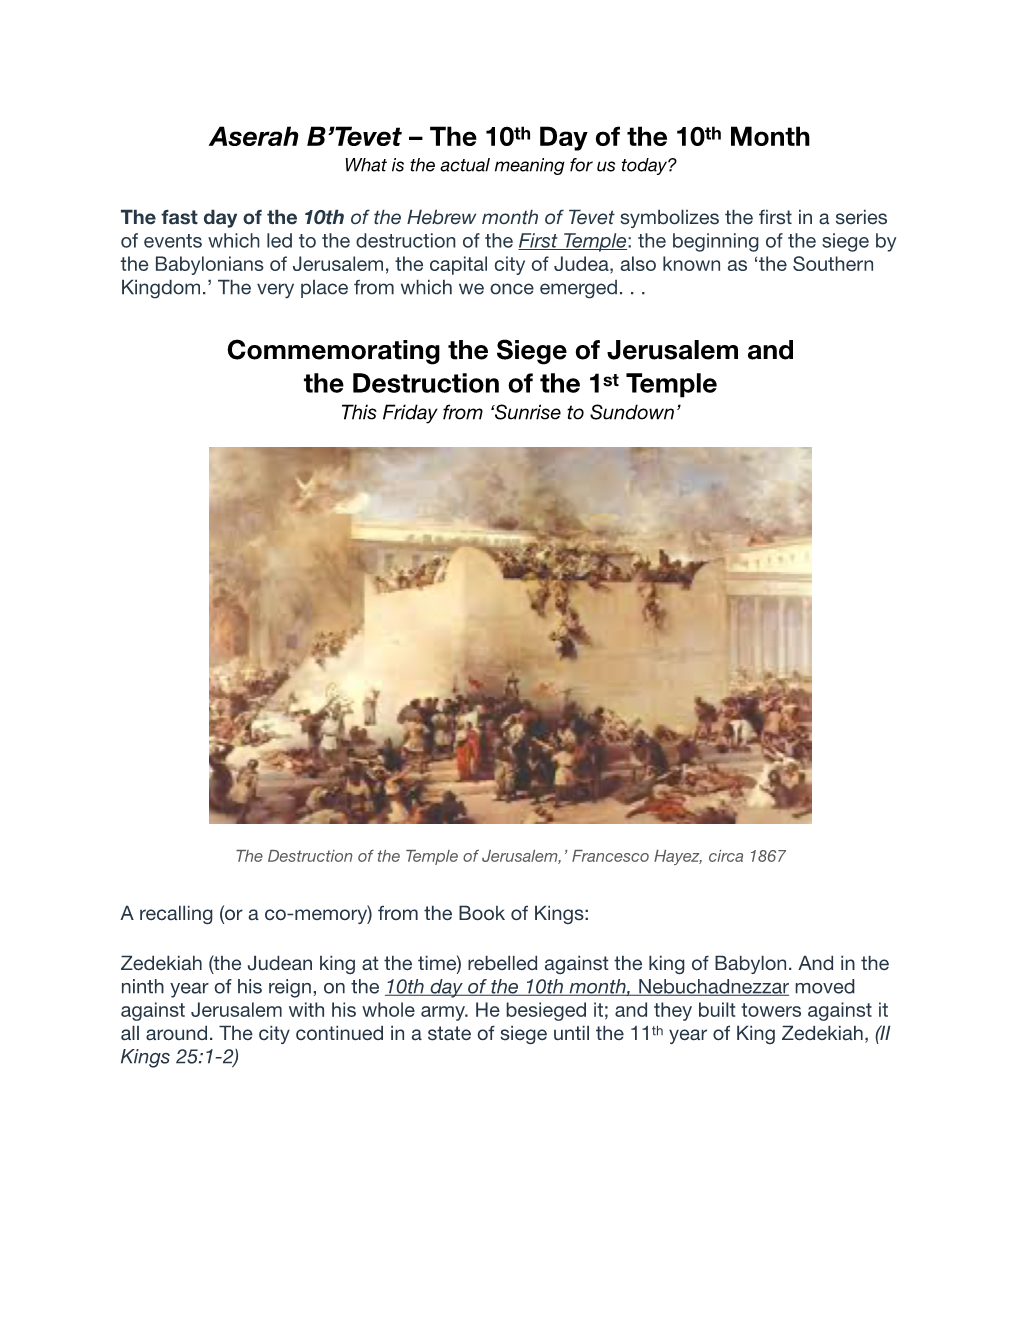 Weekly Torah Study Materials (12:23 & 12:27)